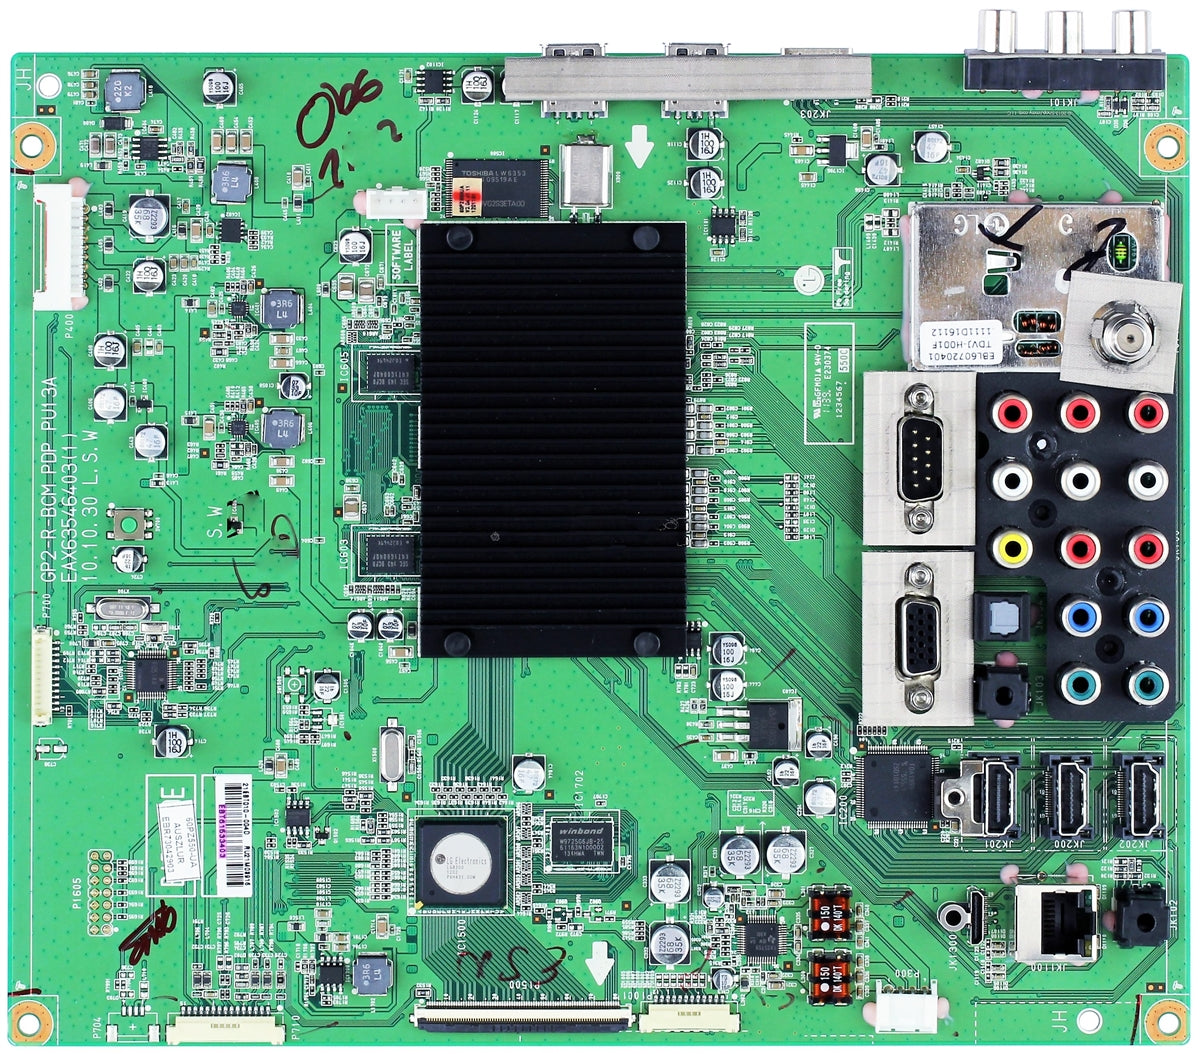 EBT61533403 LG TV Module, main, EAX63546403, 60PZ550-UA – TV Parts Today